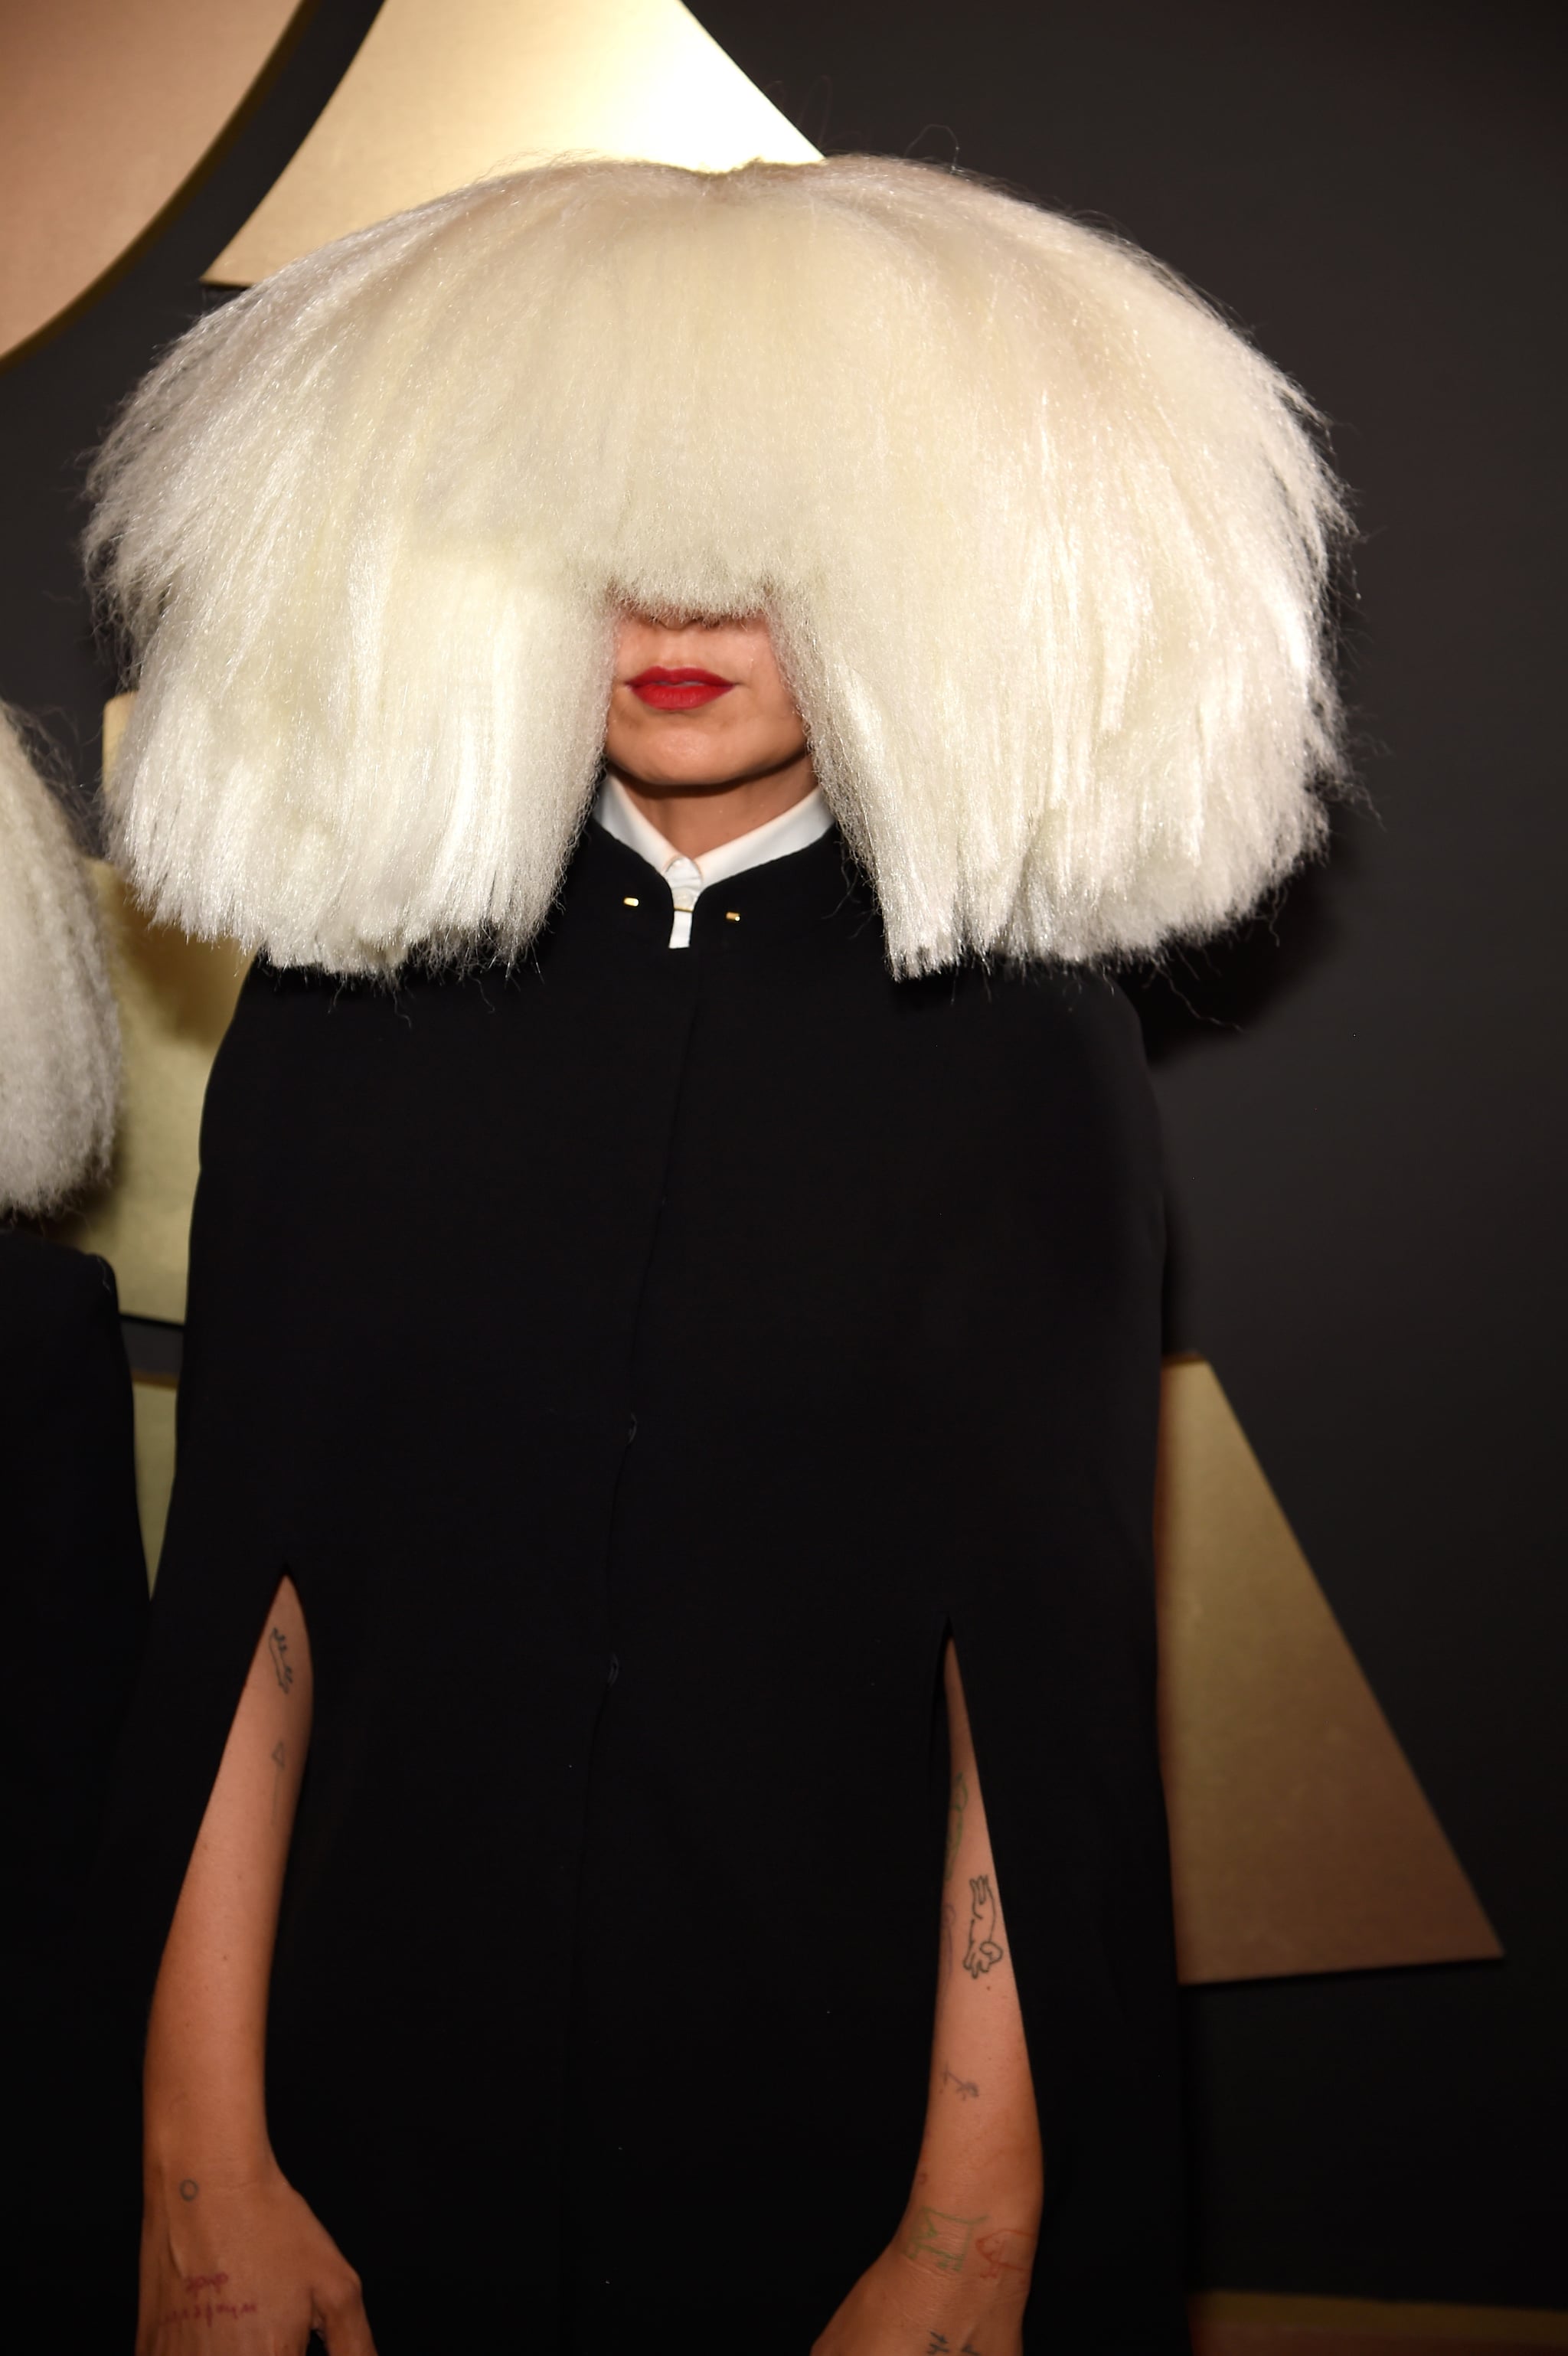 Sias Hair At The Grammy Awards 2015 Popsugar Beauty